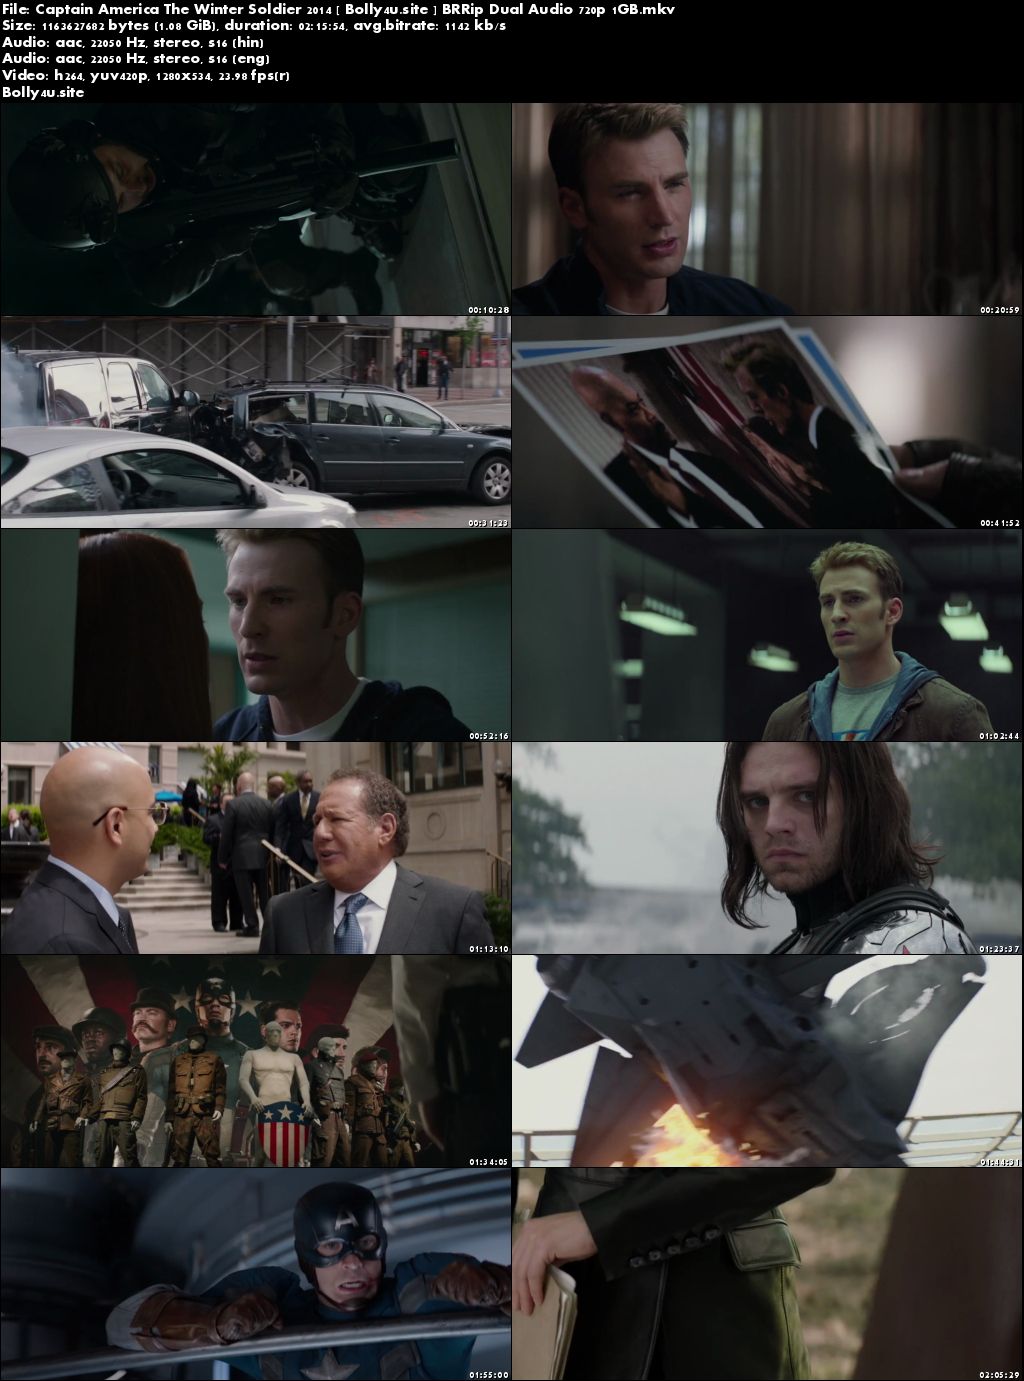 Captain America The Winter Soldier 2014 BRRip 1GB Hindi Dual Audio 720p Download